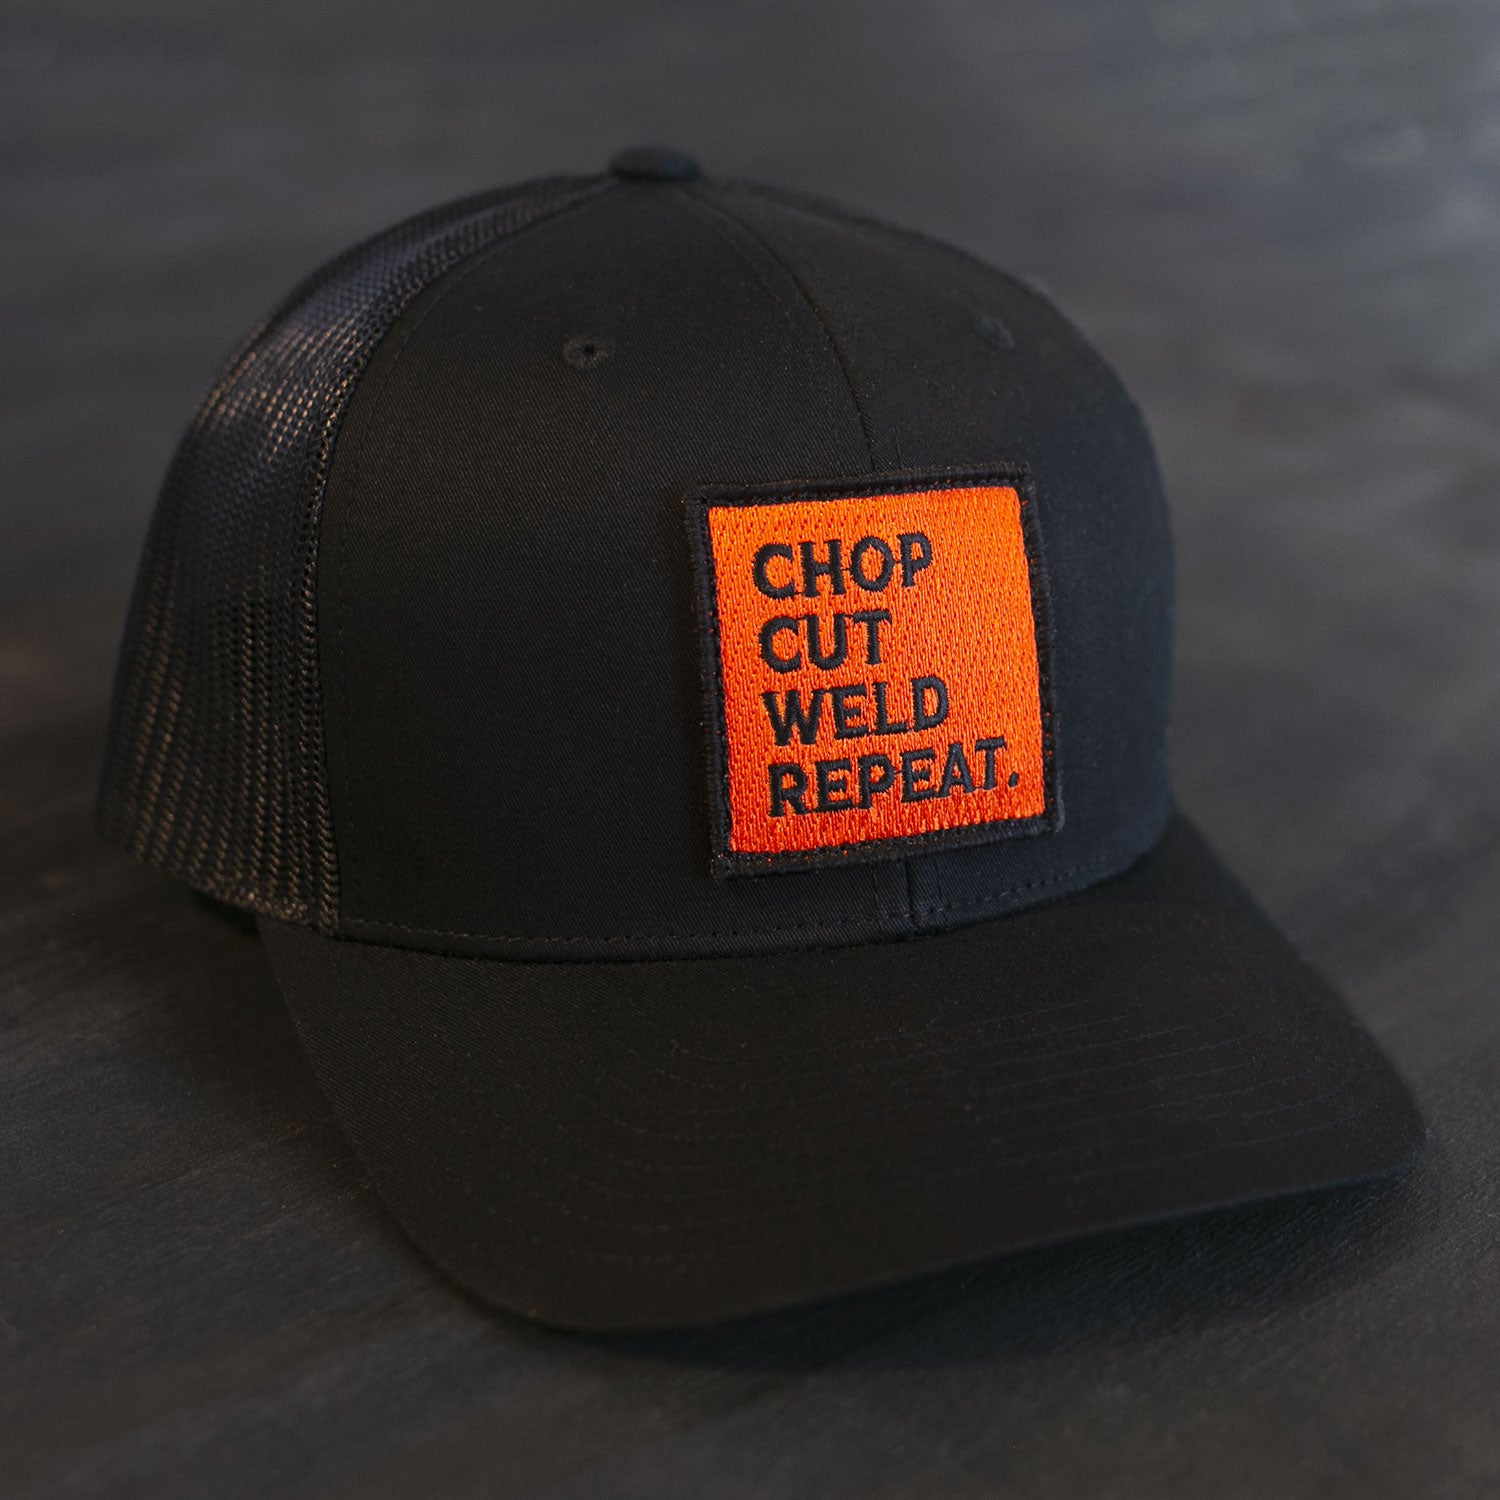 chop cut weld repeat welders & fabricators hat black